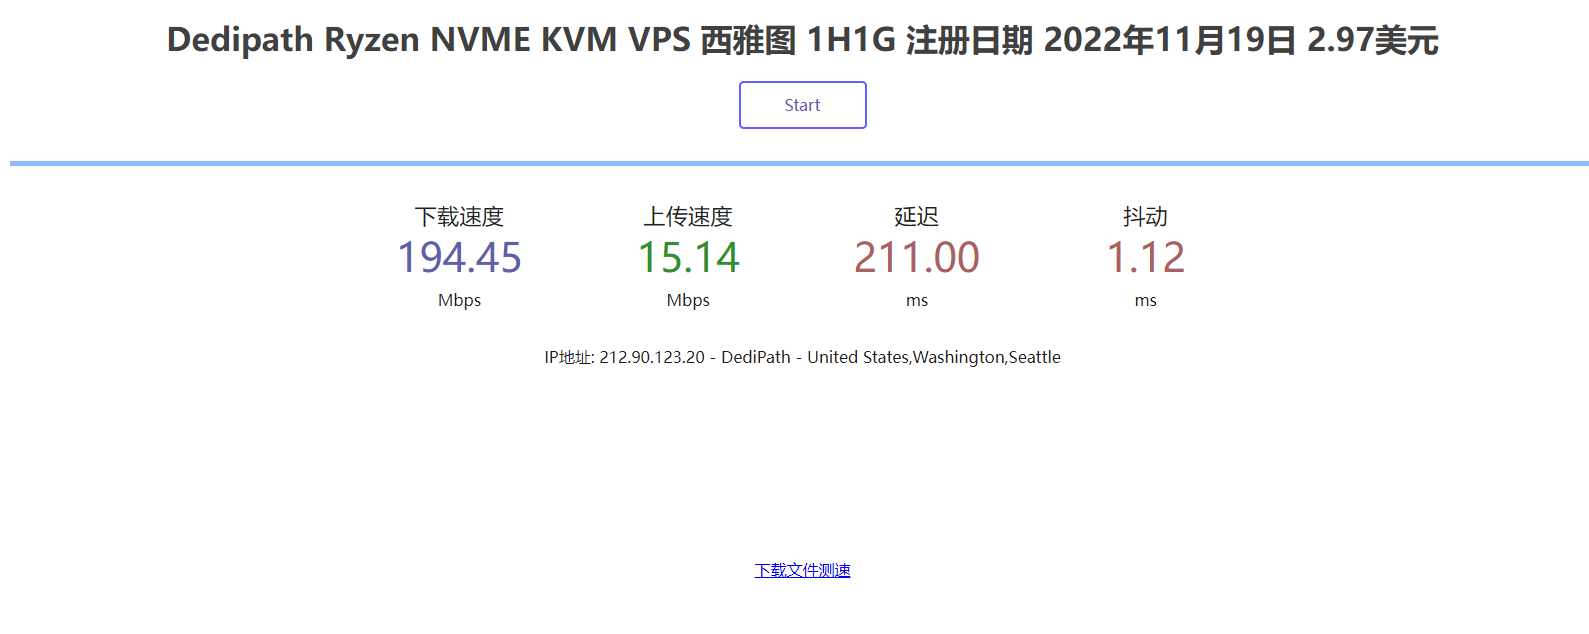 dedipath Ryzen NVME KVM VPS 西雅图 1H1G 测速